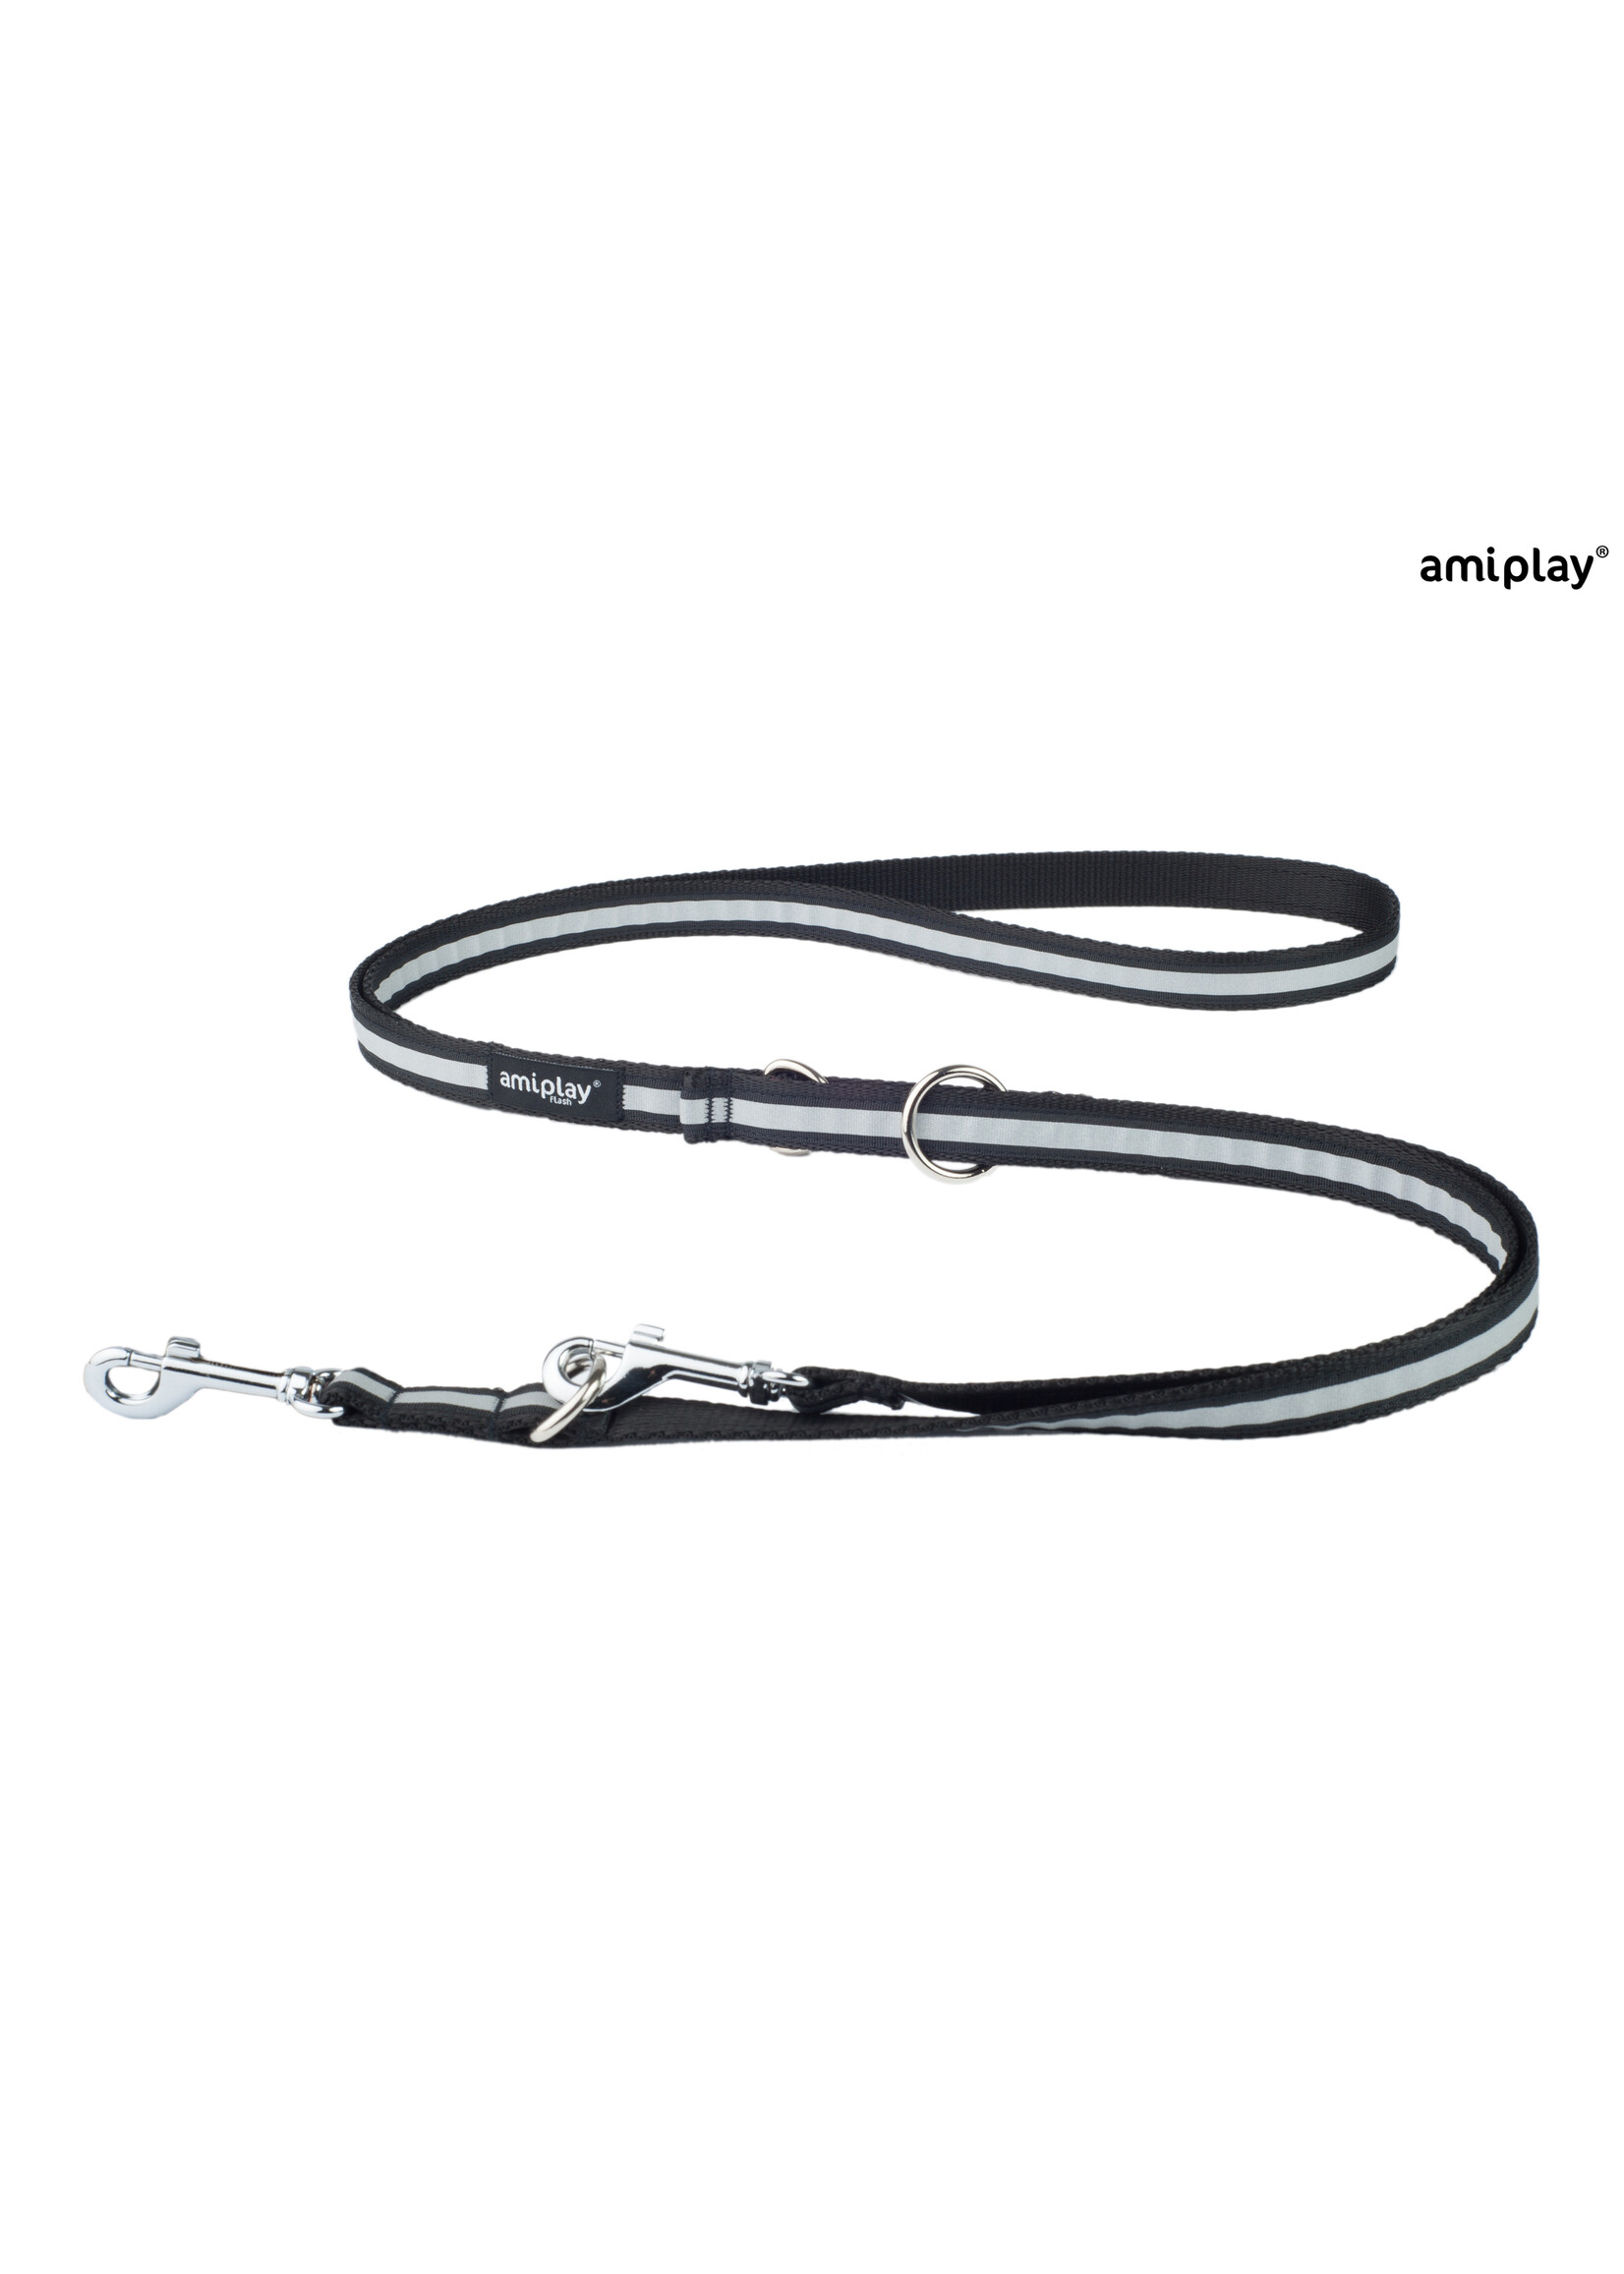 Amiplay Leiband verstelbaar 6in1 Shine zwart maat-M / 100-200x1,5cm